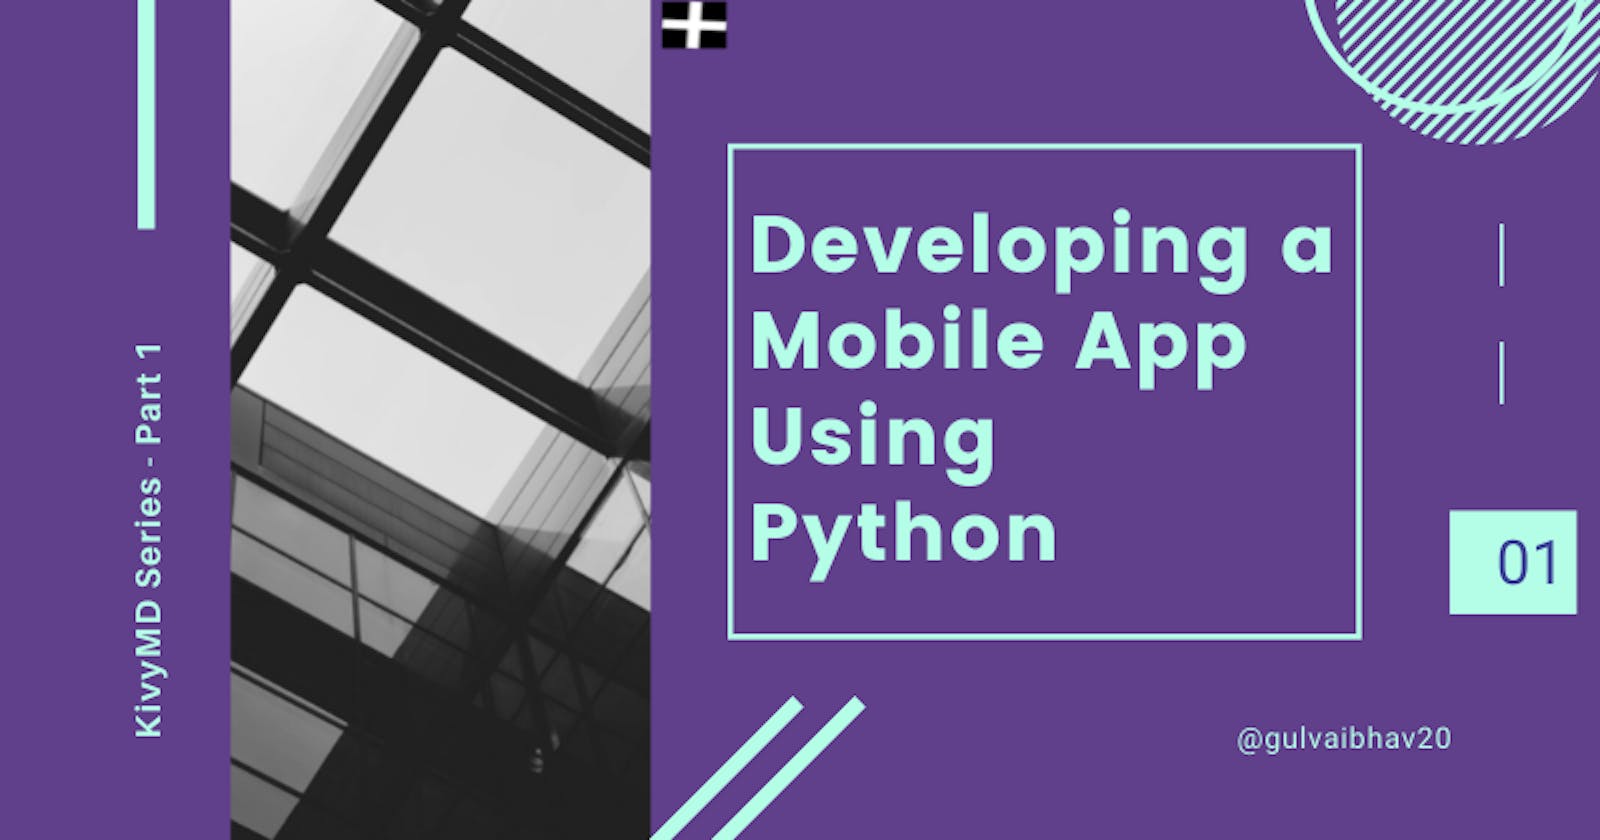 KivyMD - Developing a Mobile App Using Python